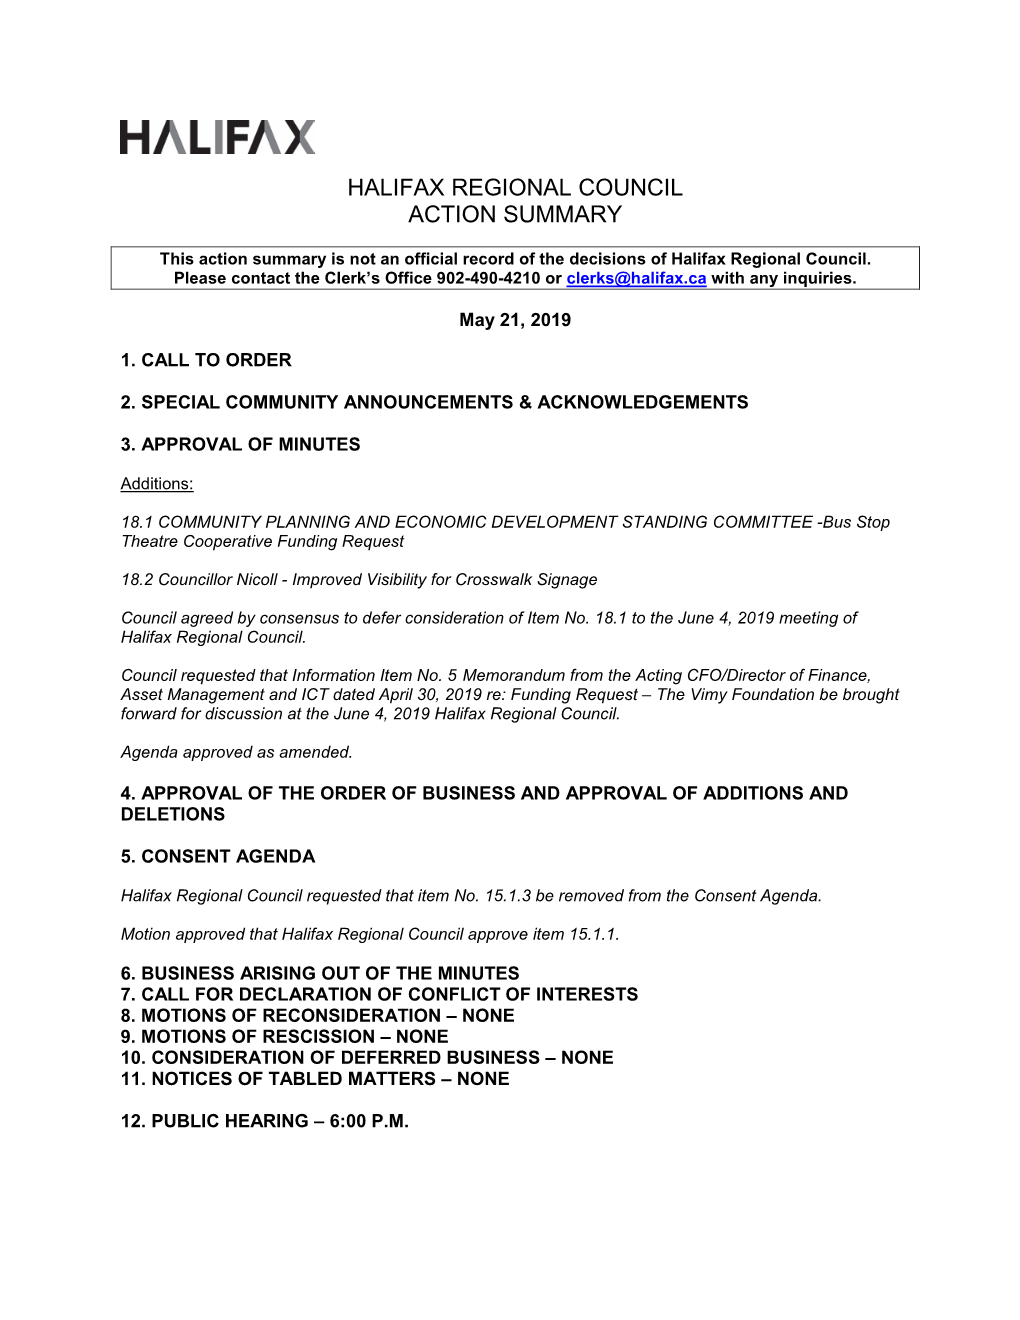 Halifax Regional Council Action Summary